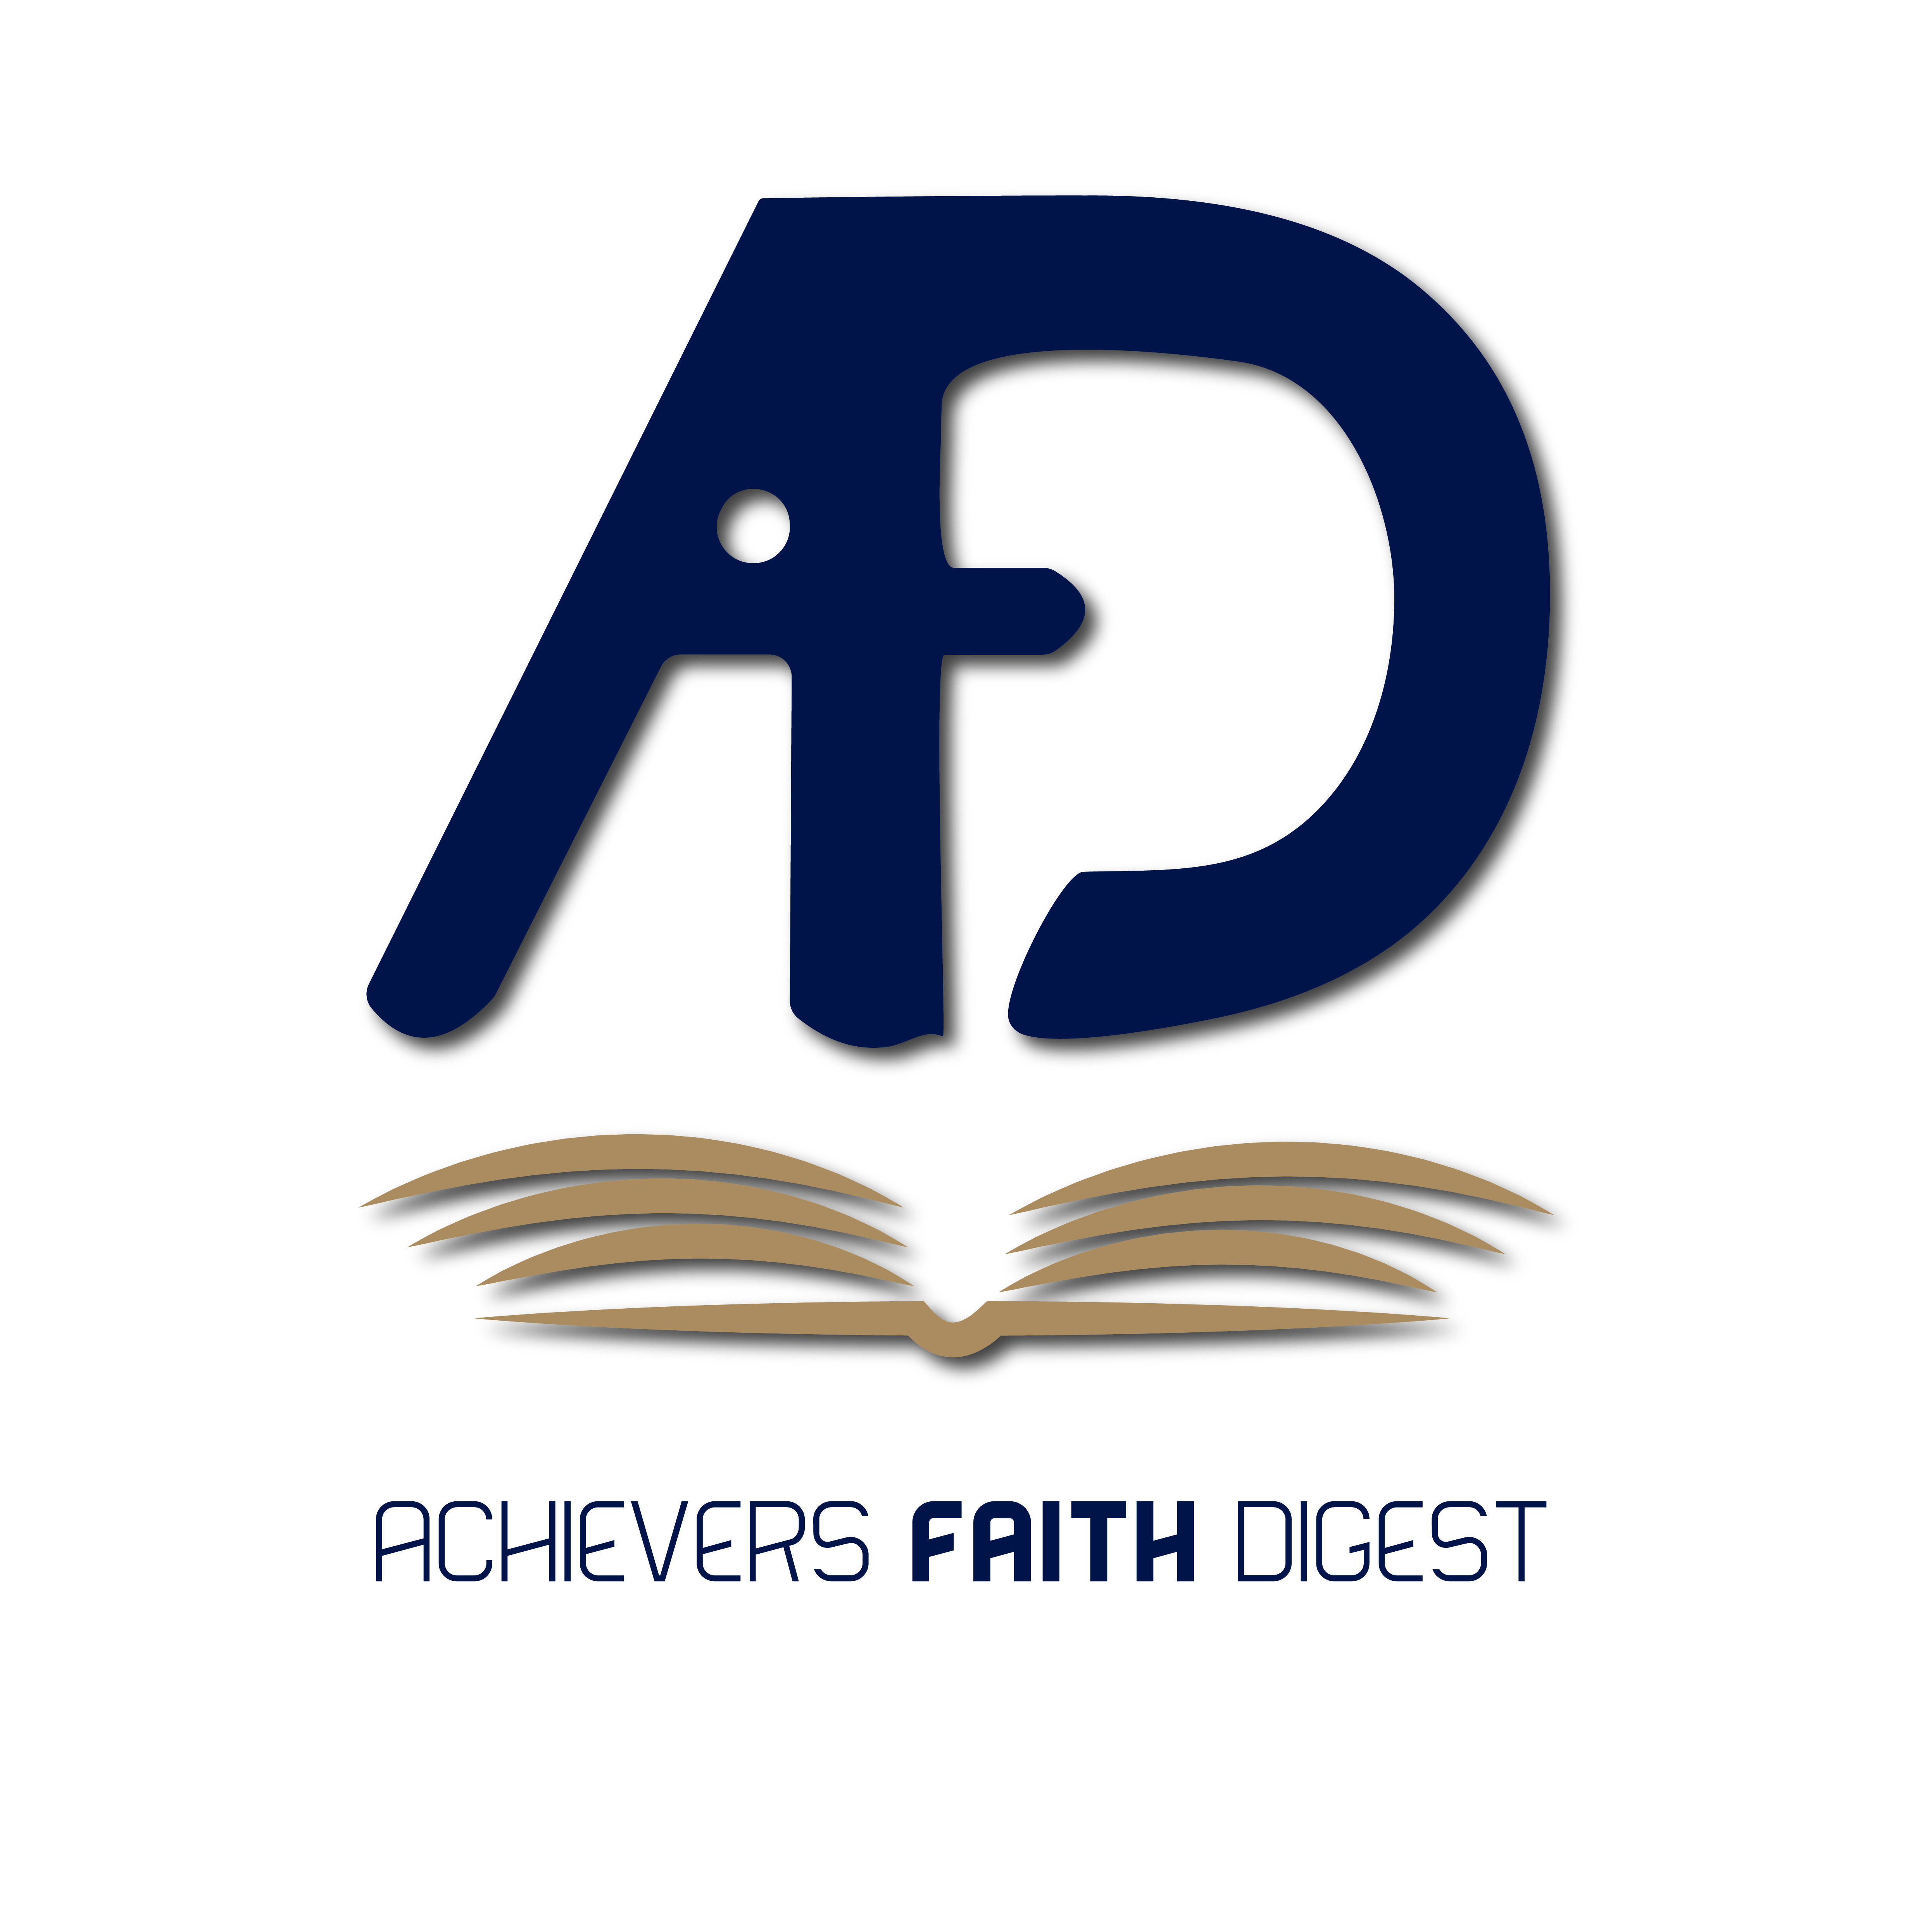 Achievers'Faith Digest Logo